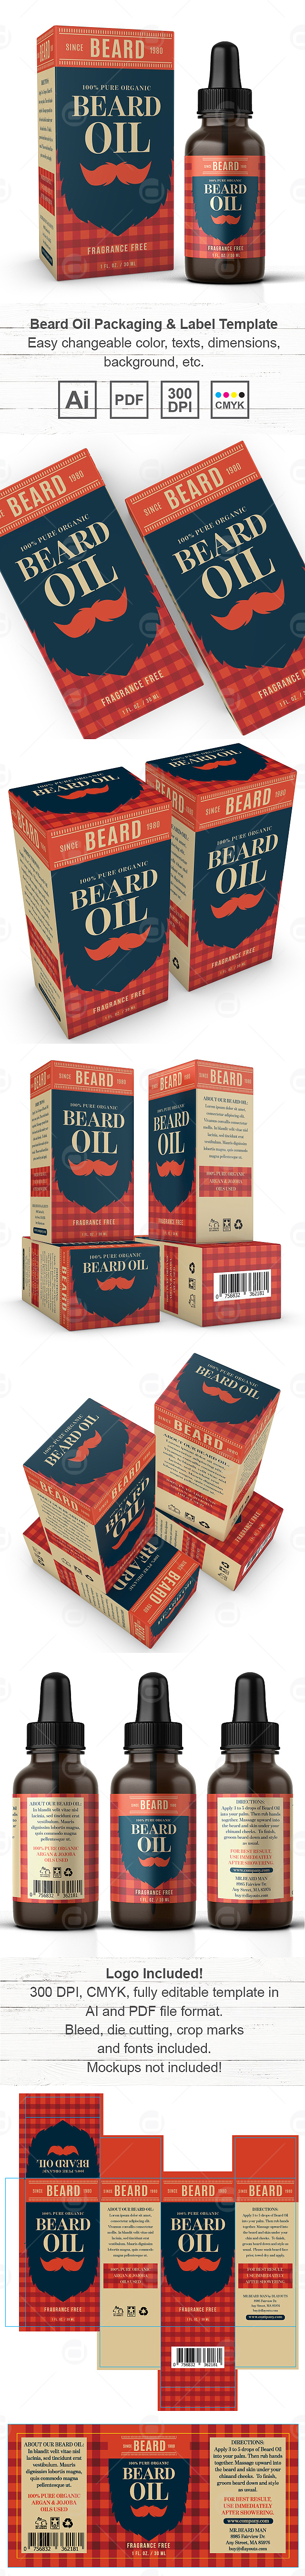 Beard Oil Packaging & Label Template